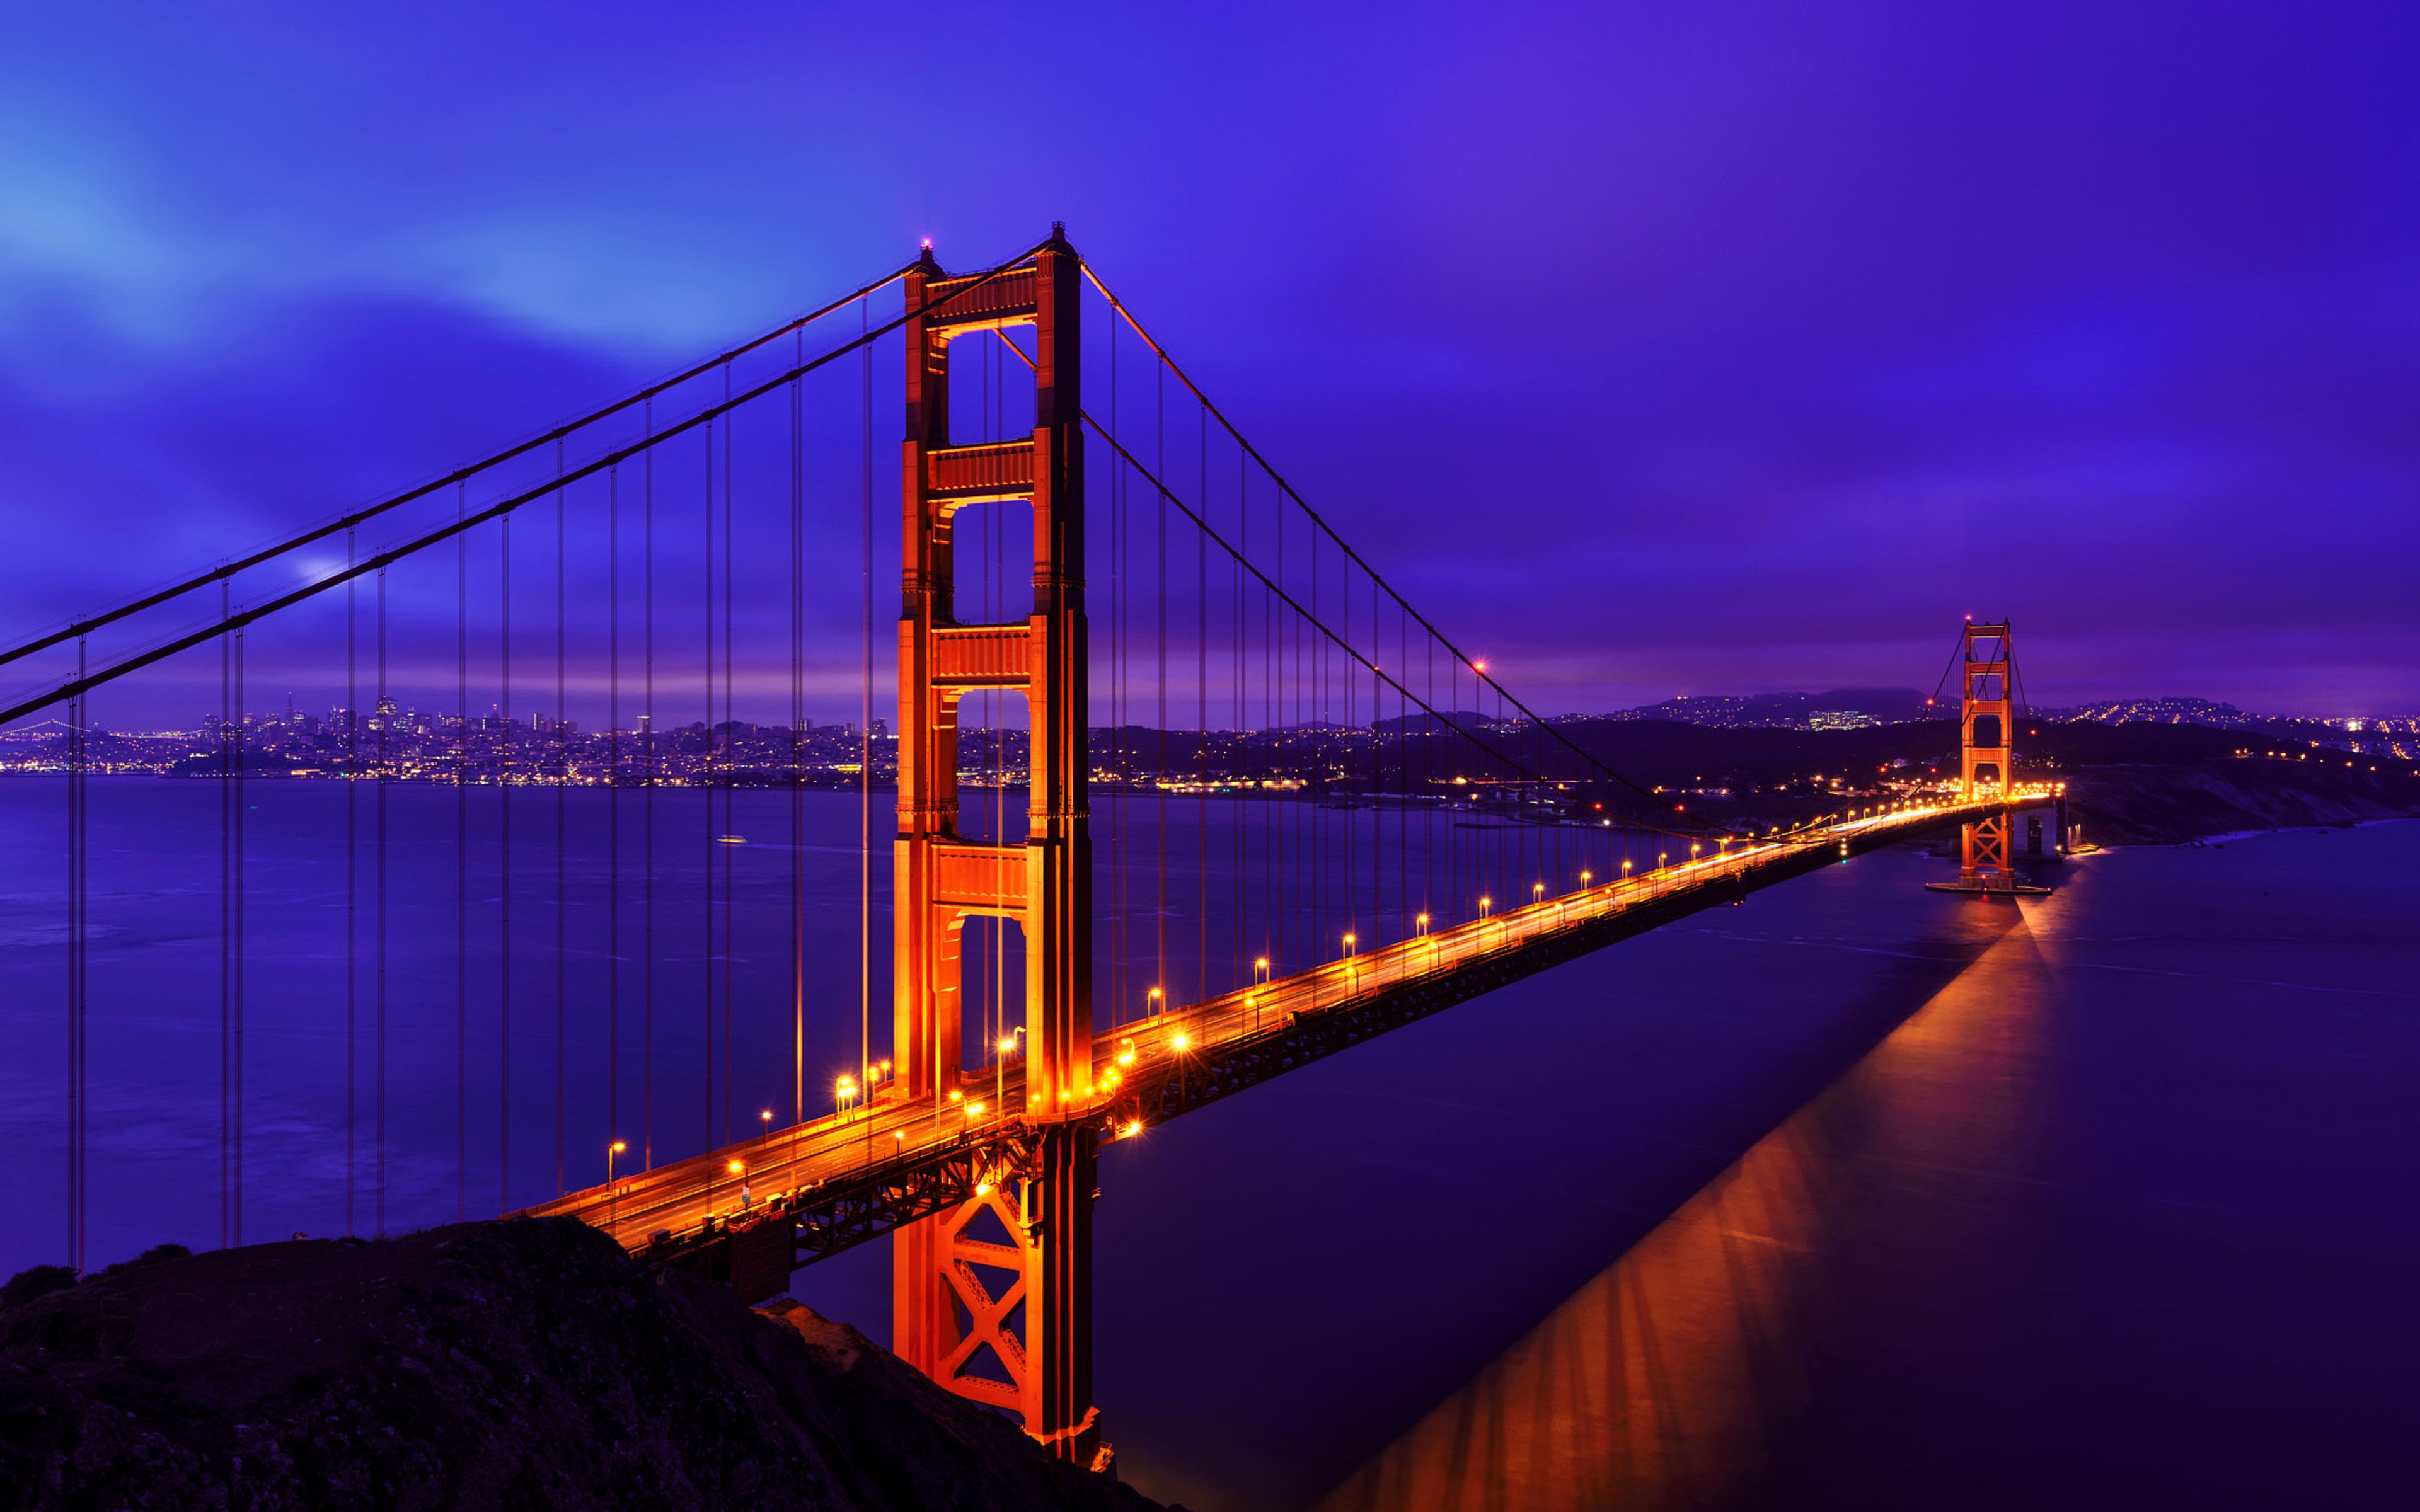 Golden Gate Bridge Blue Night Suspension Bridge In San Francisco California United States 4k Ultra HD Wallpaper For Desktop And Mobile Phones, Wallpaper13.com